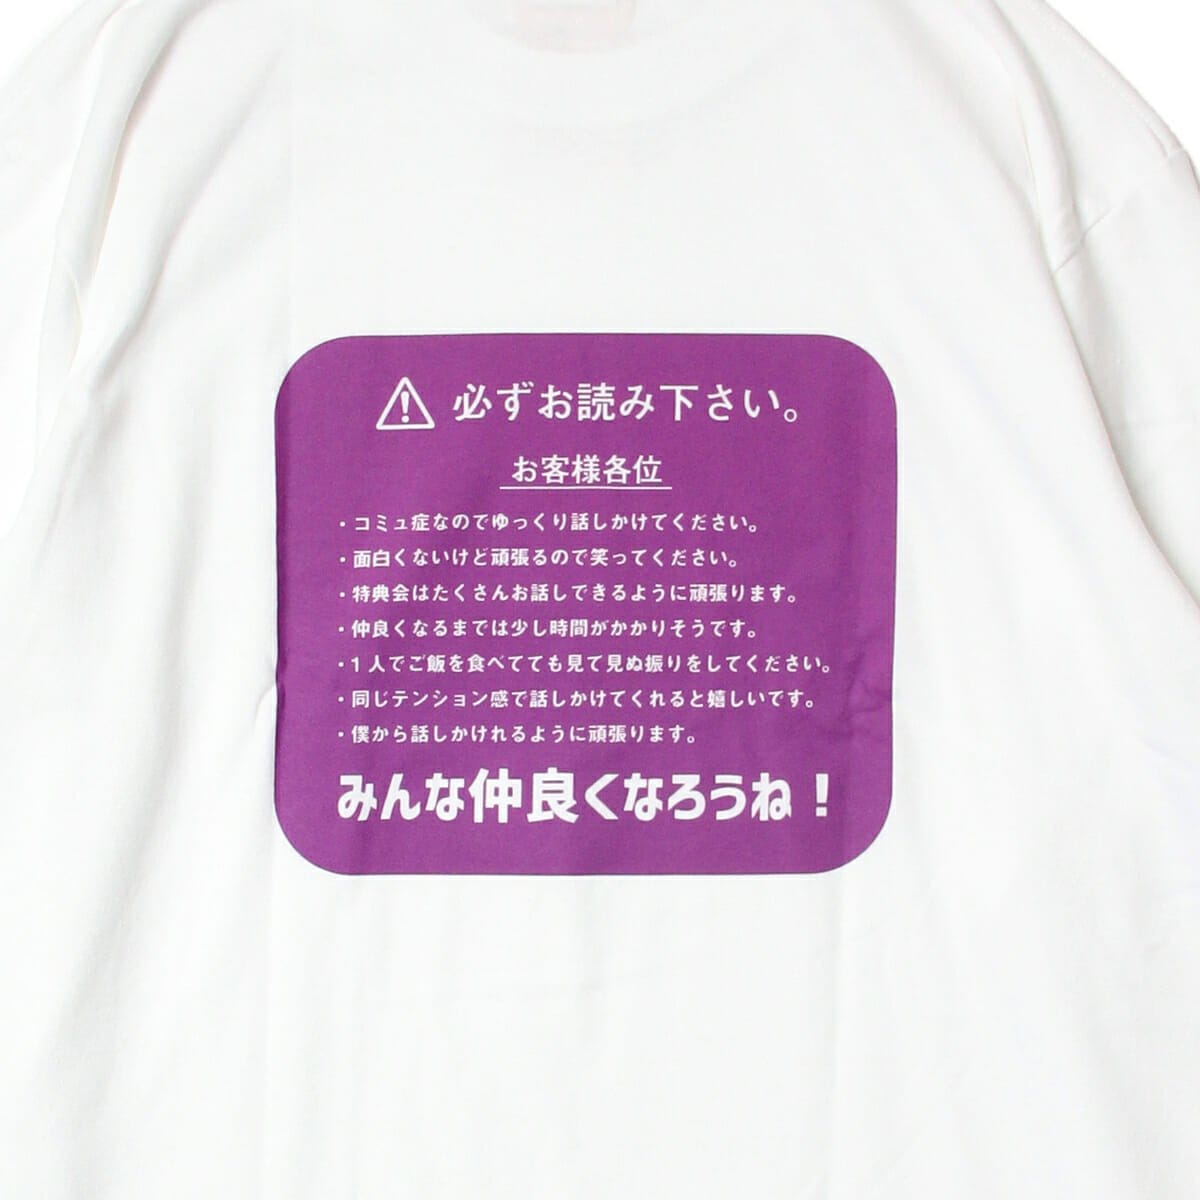 9bic 六花清春 親衛隊Tシャツ